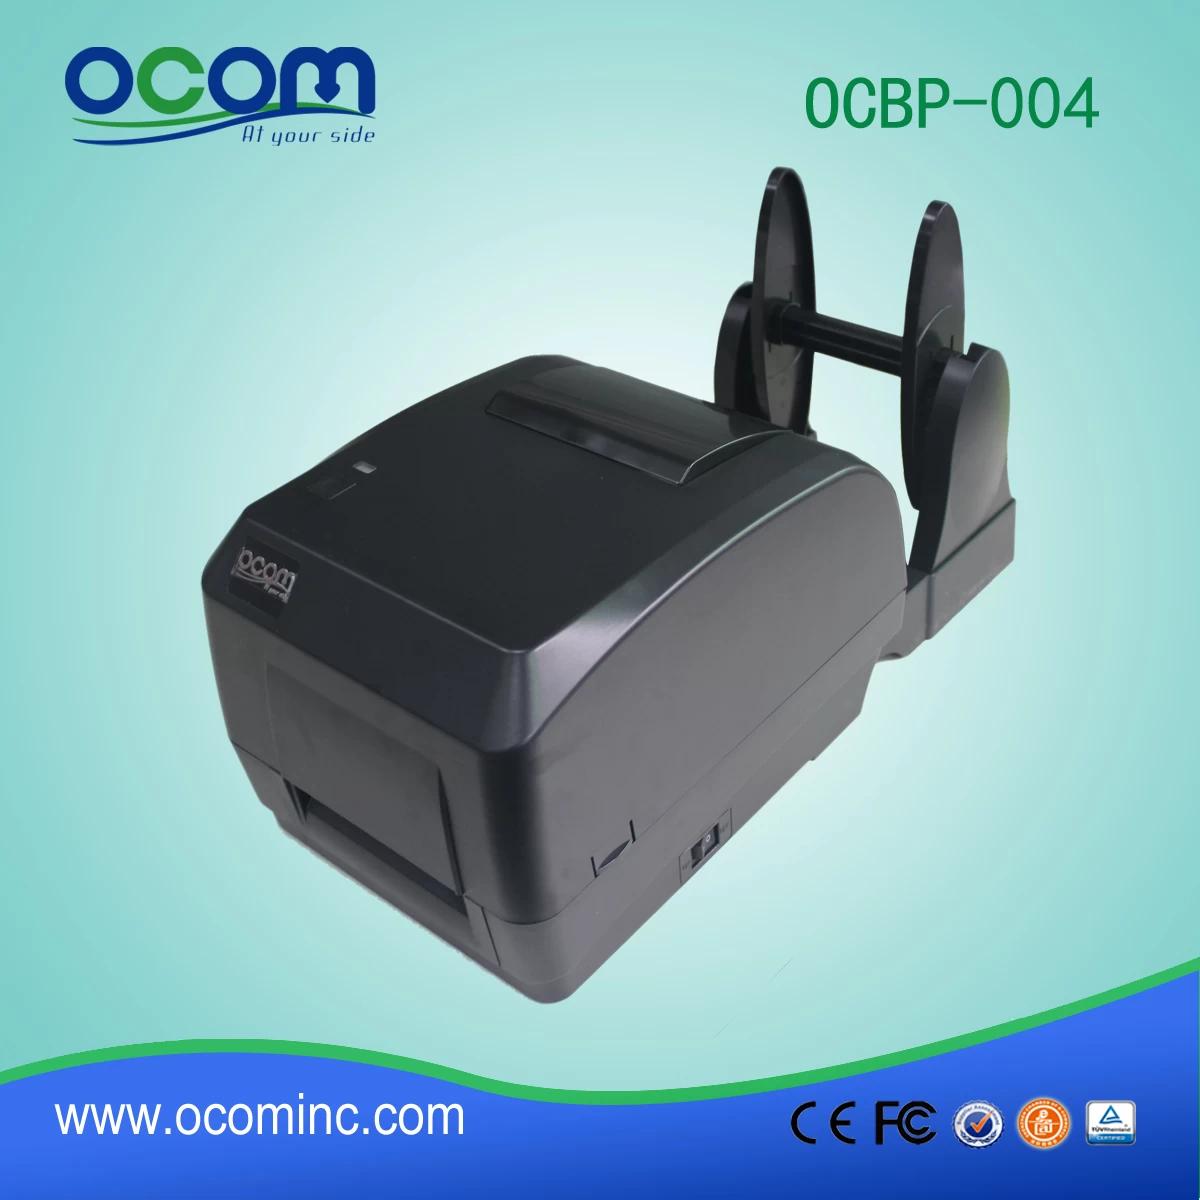 (OCBP-004) High quality Chinese heat transfer printer